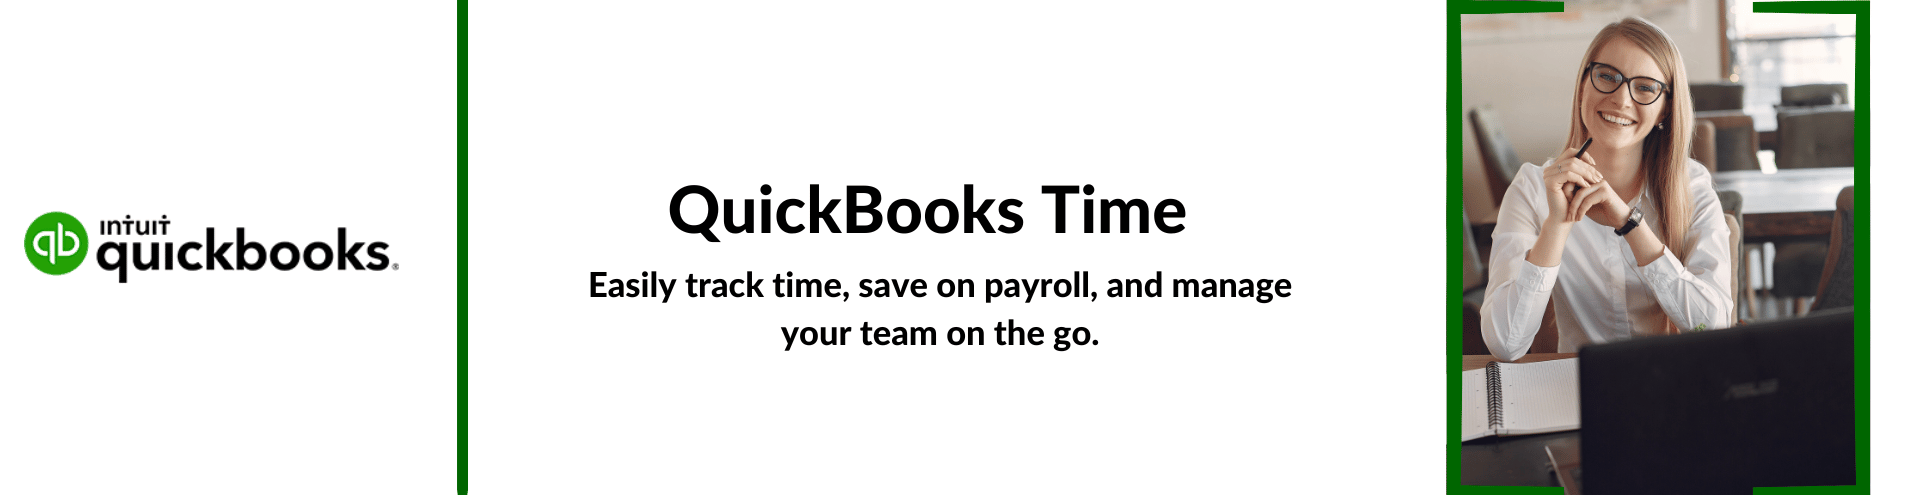 QuickBooks Time Banner